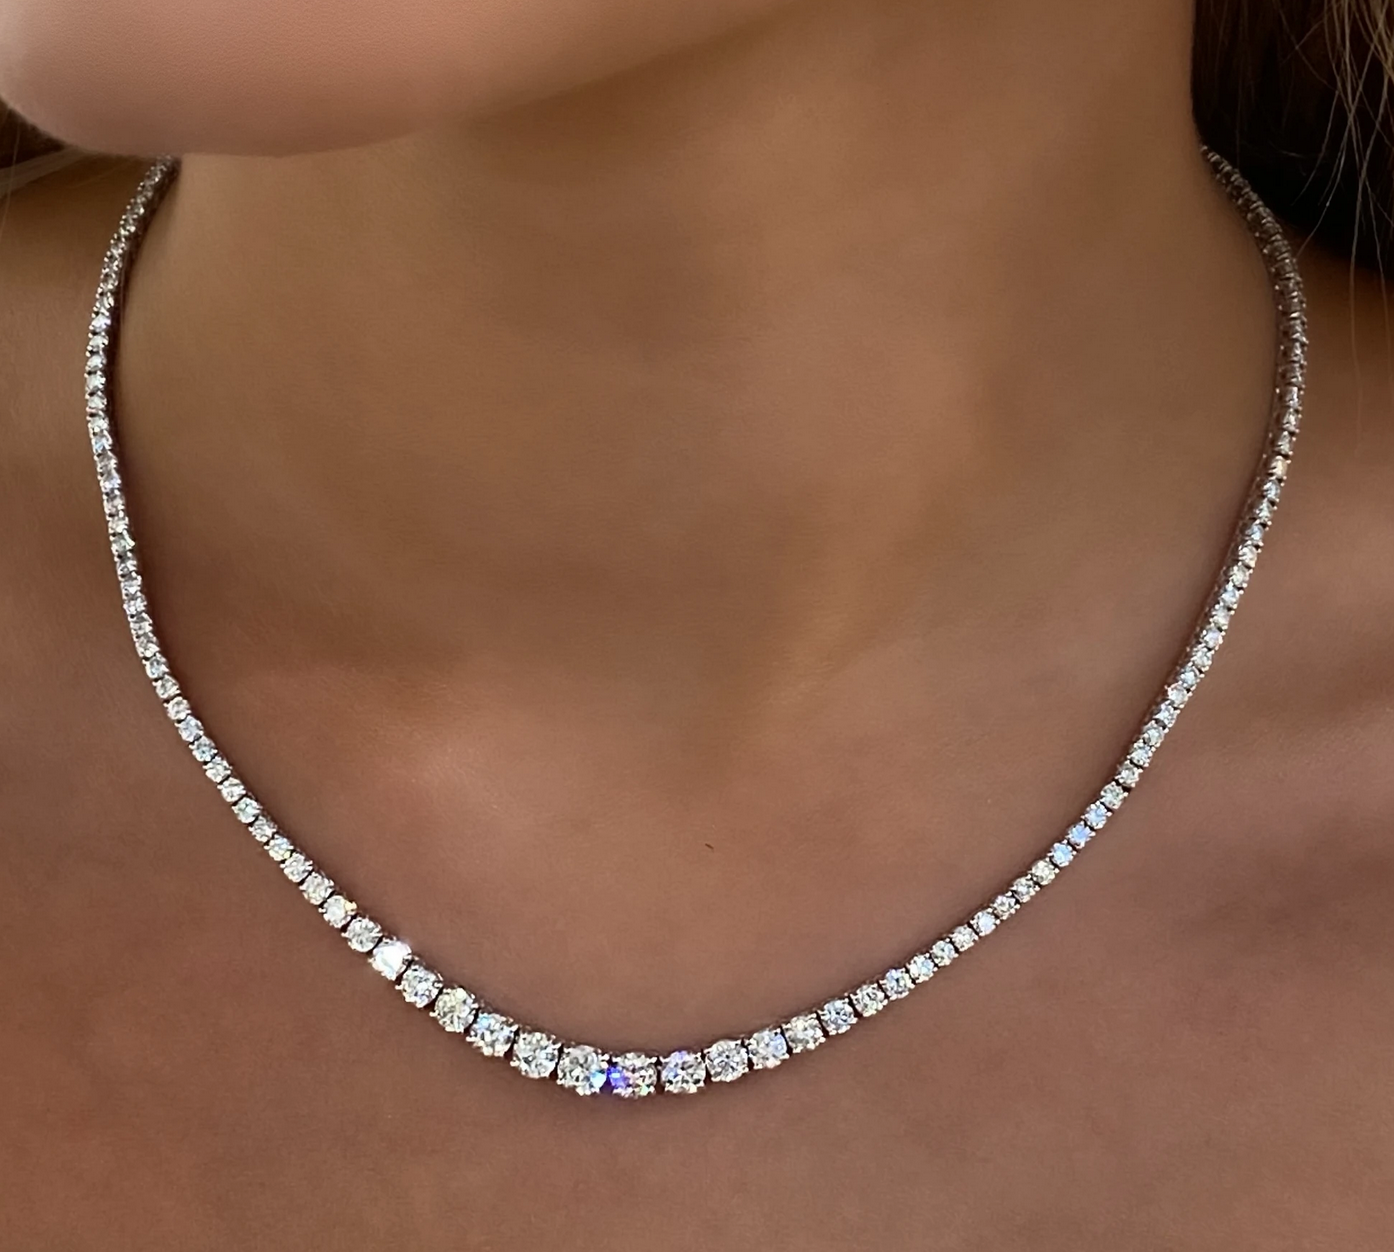 19 Carat Diamond Tennis Necklace in 18K Gold 16 Pointer